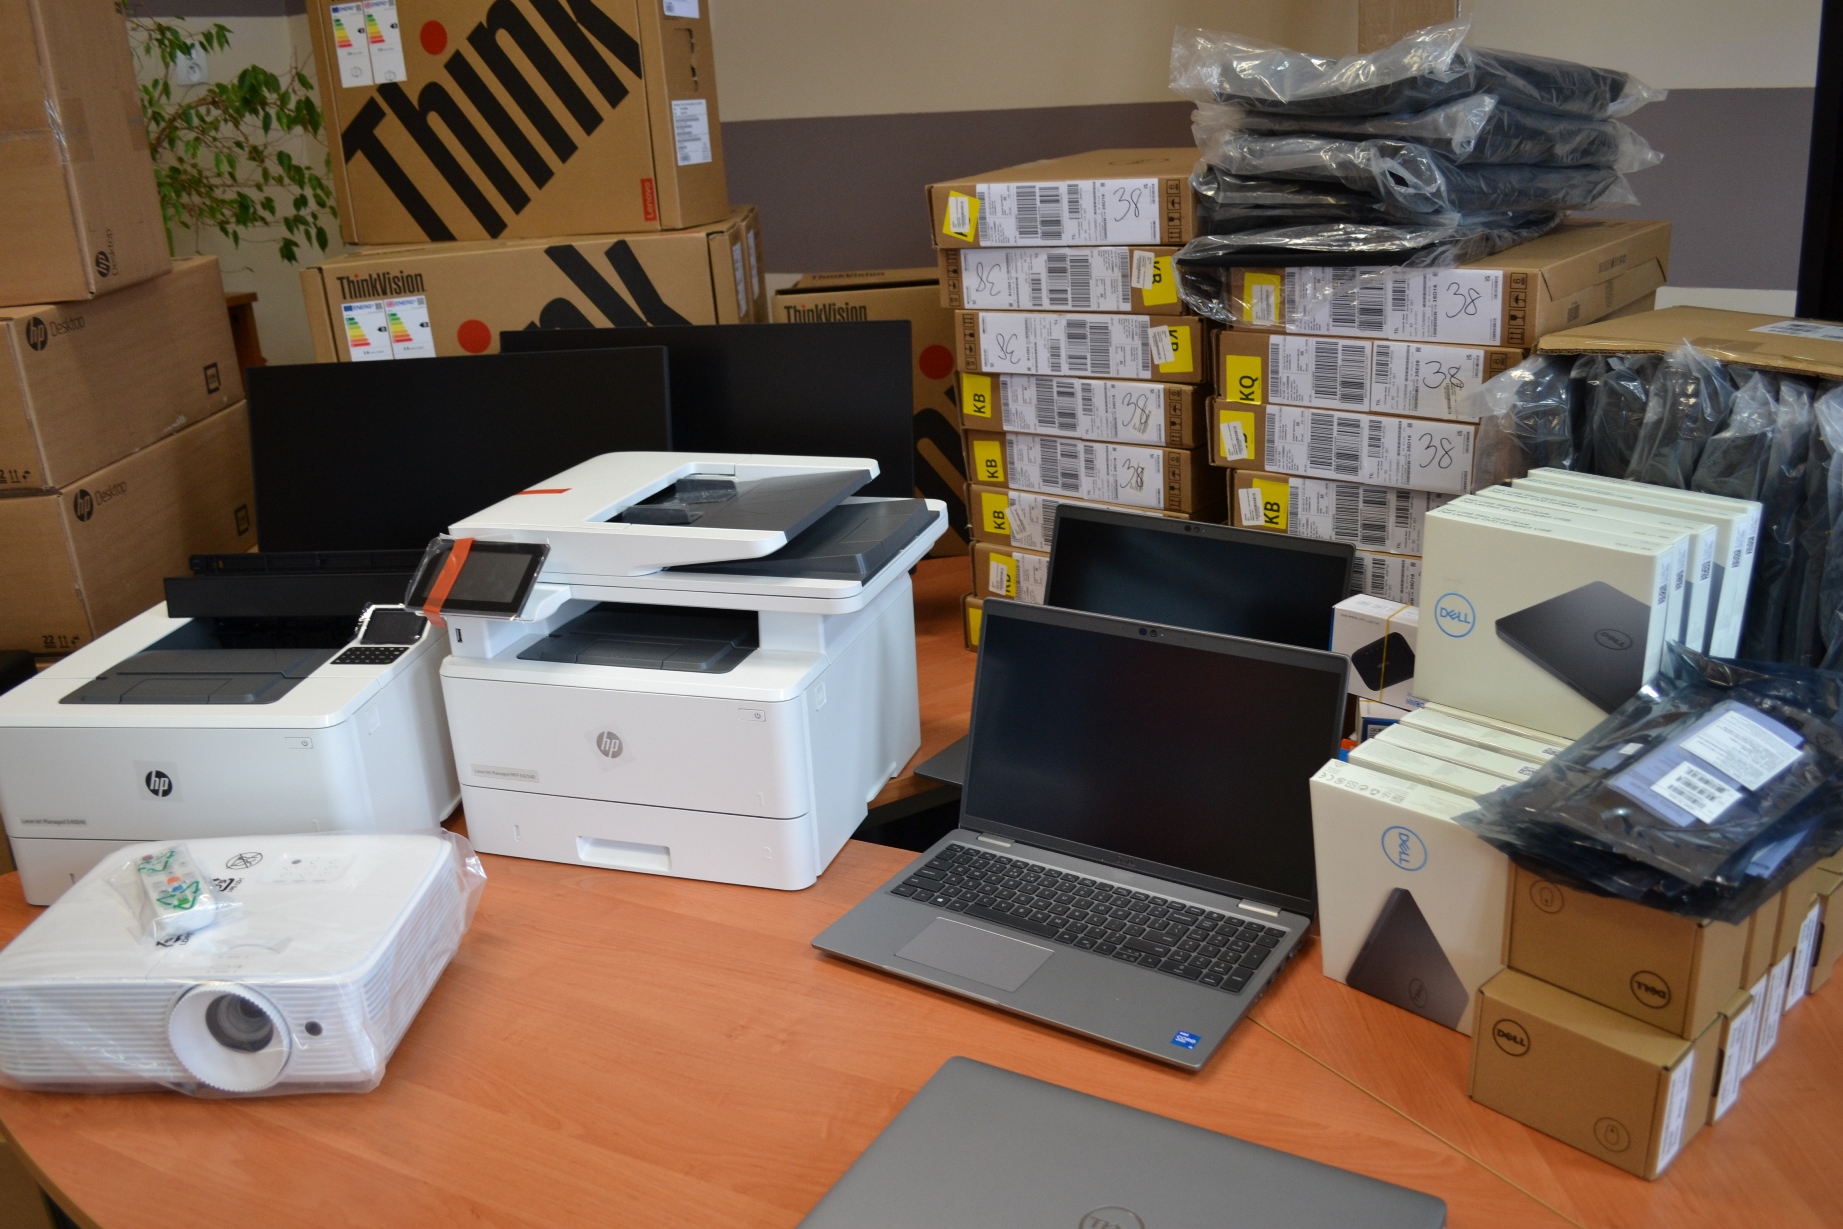 Na stole leżą drukarki, laptopy, projektor oraz kartony